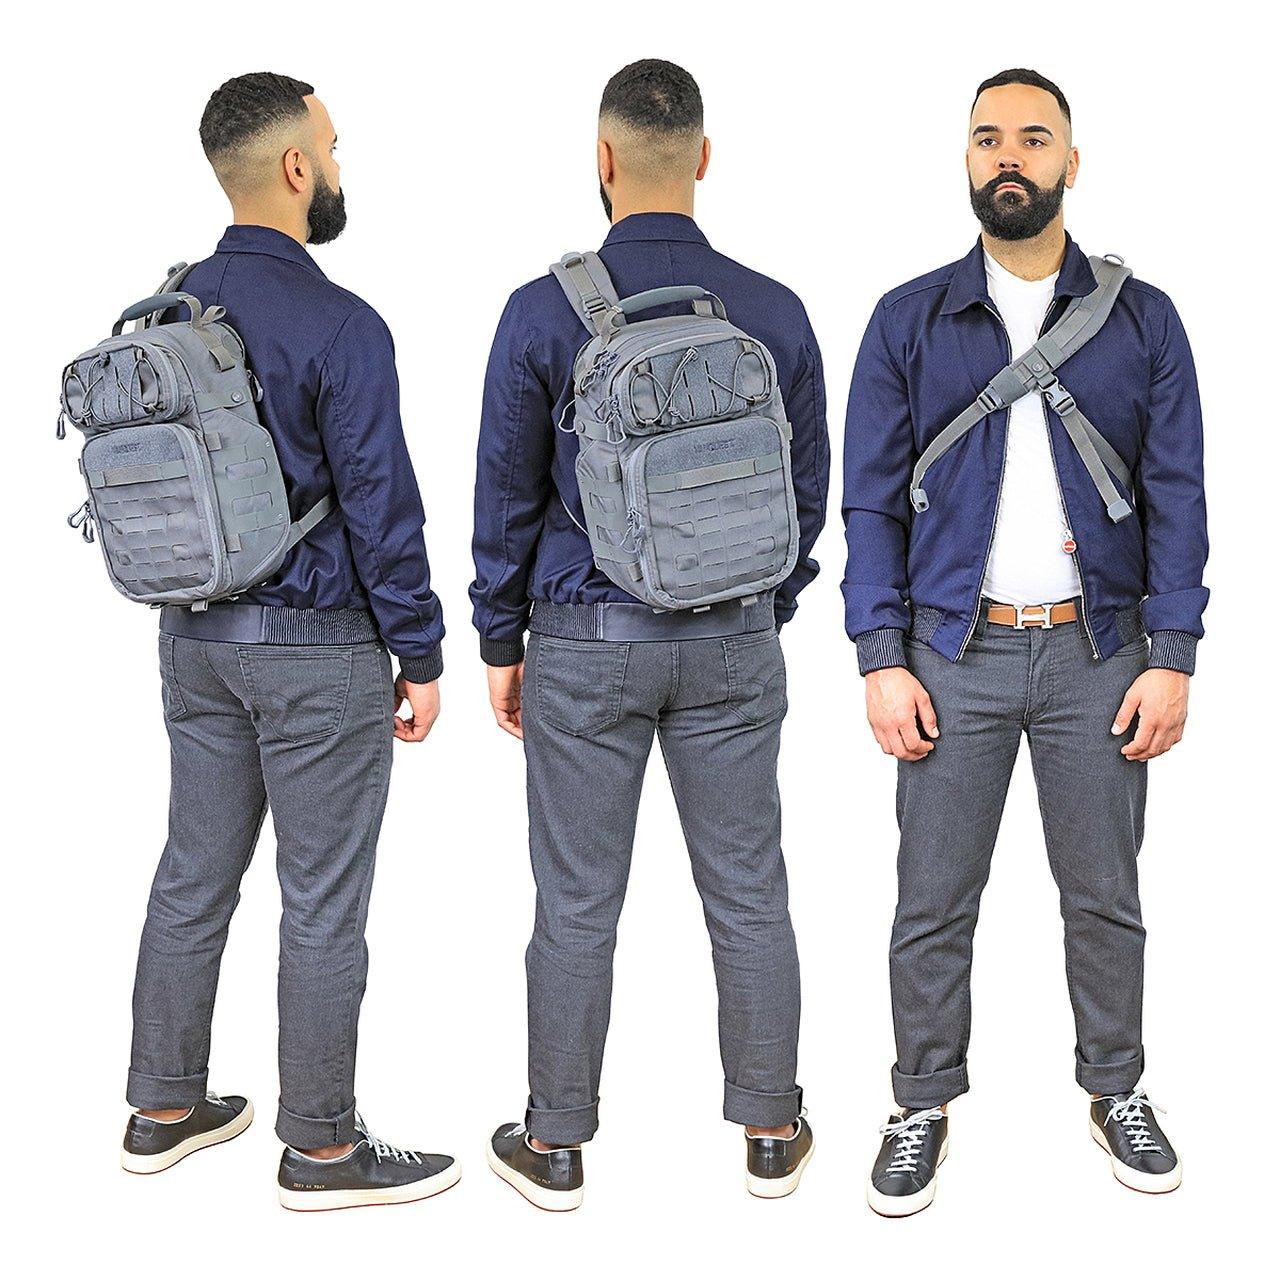 Vanquest JAVELIN-18 Backpack - Vendor